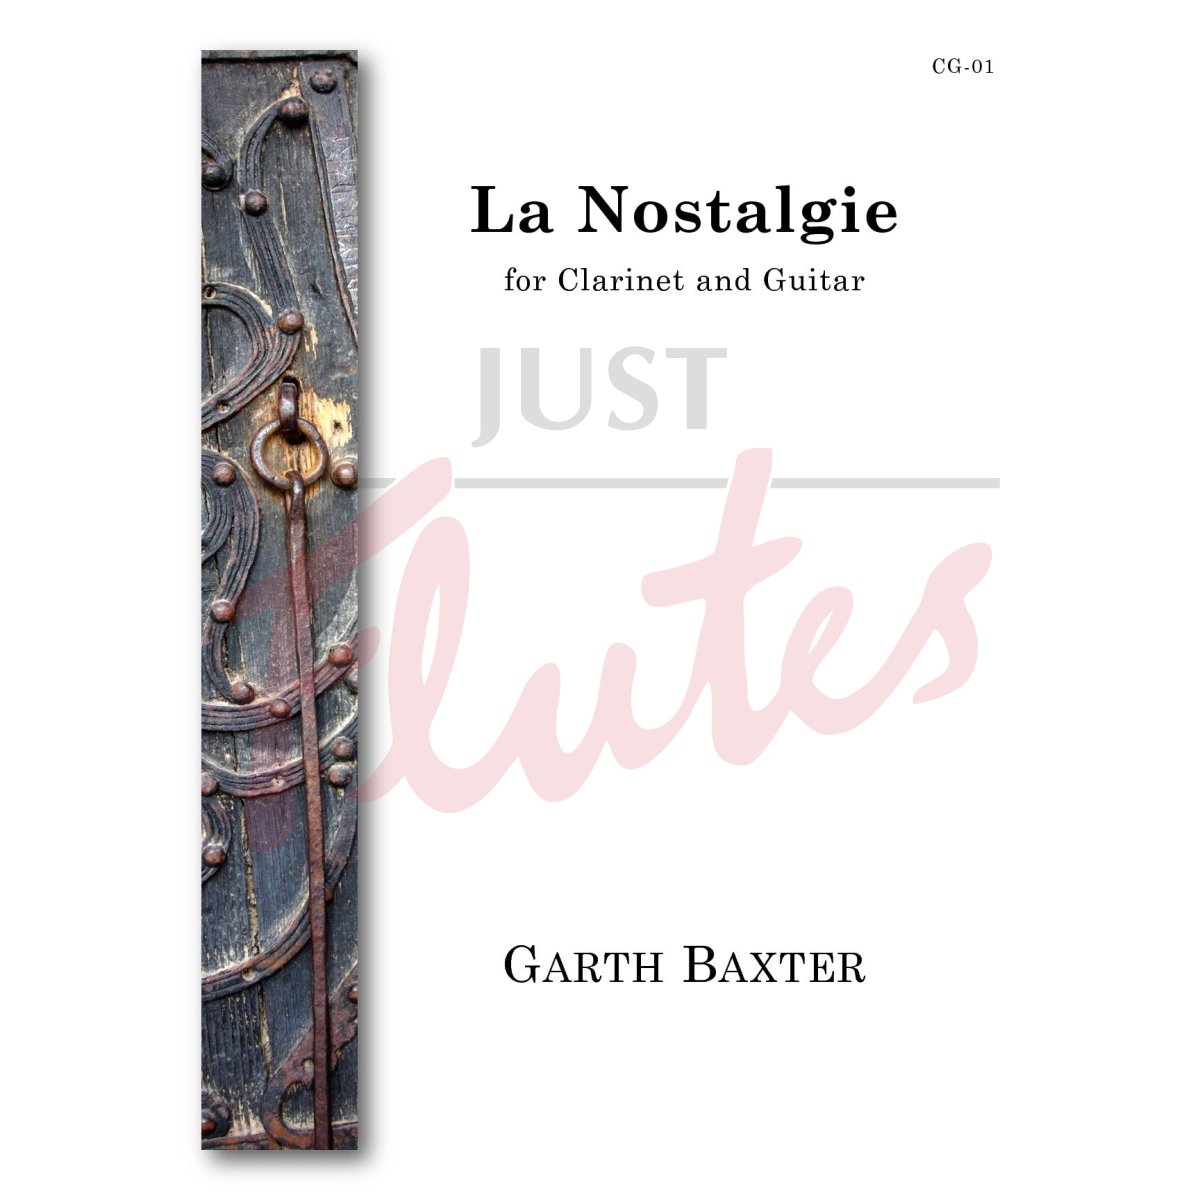 La Nostalgie for Clarinet and Guitar